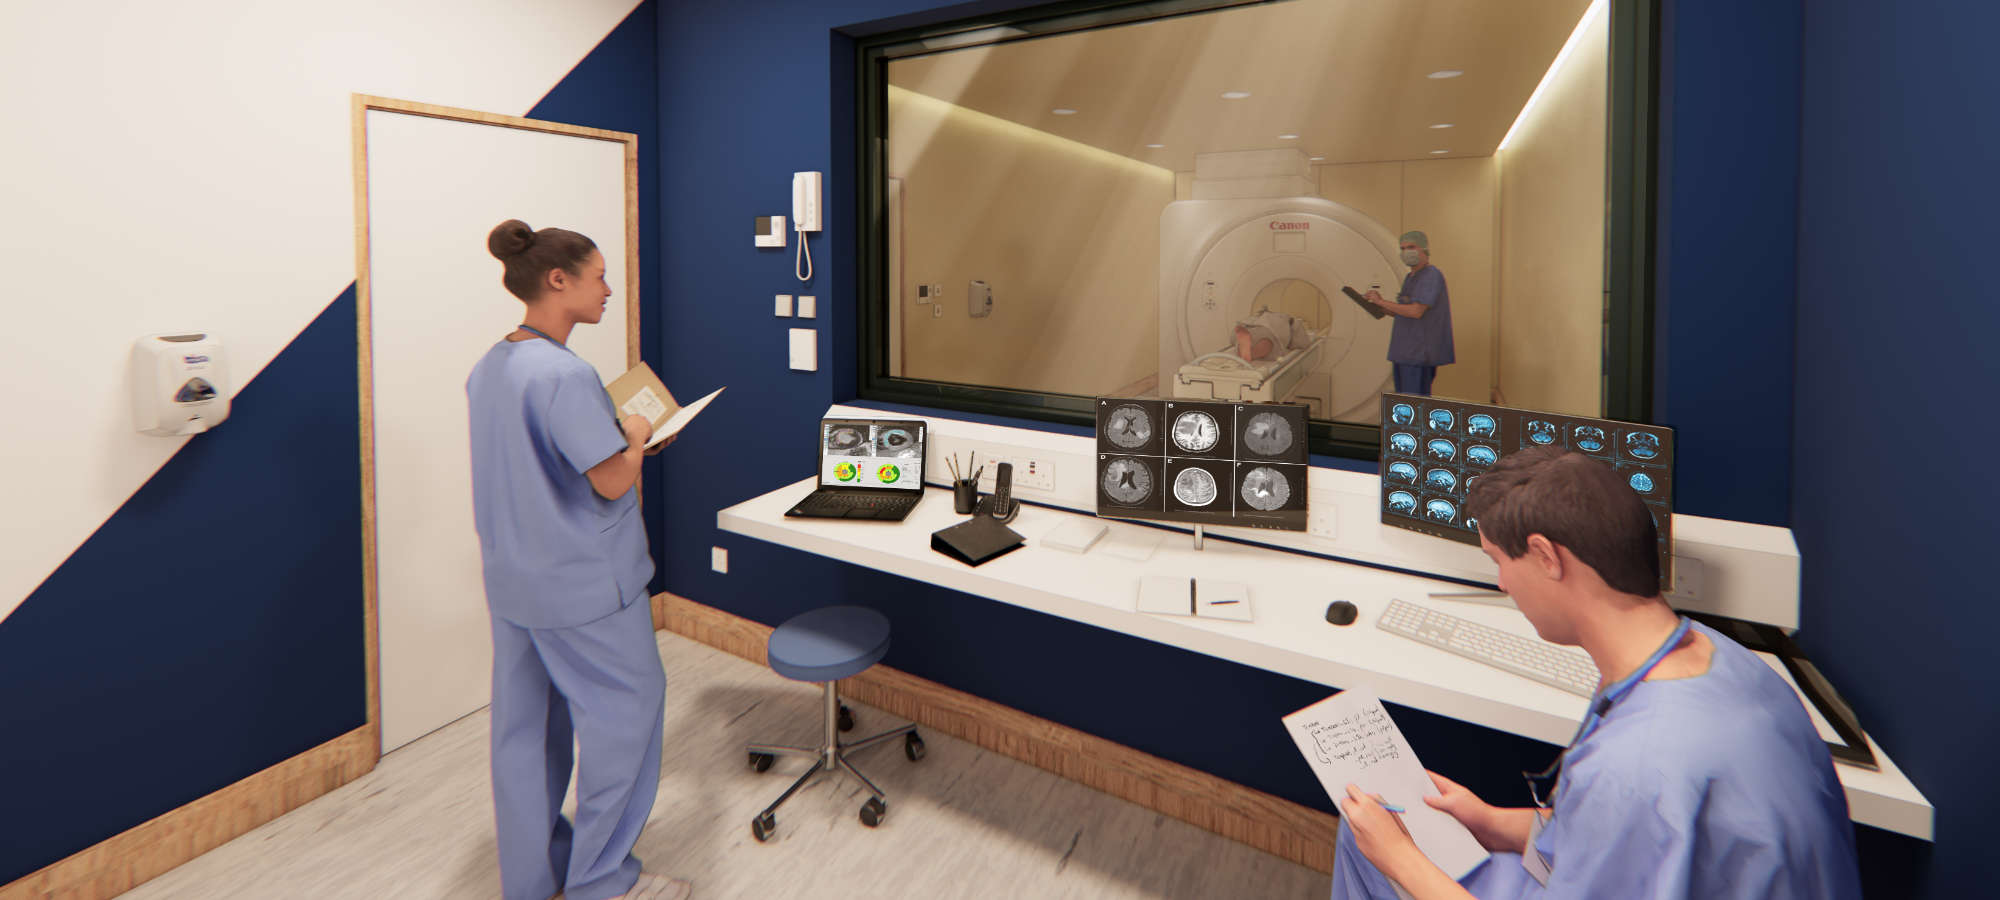 MRI Scan Room in an Imaging Matters Community Diagnostic Hub